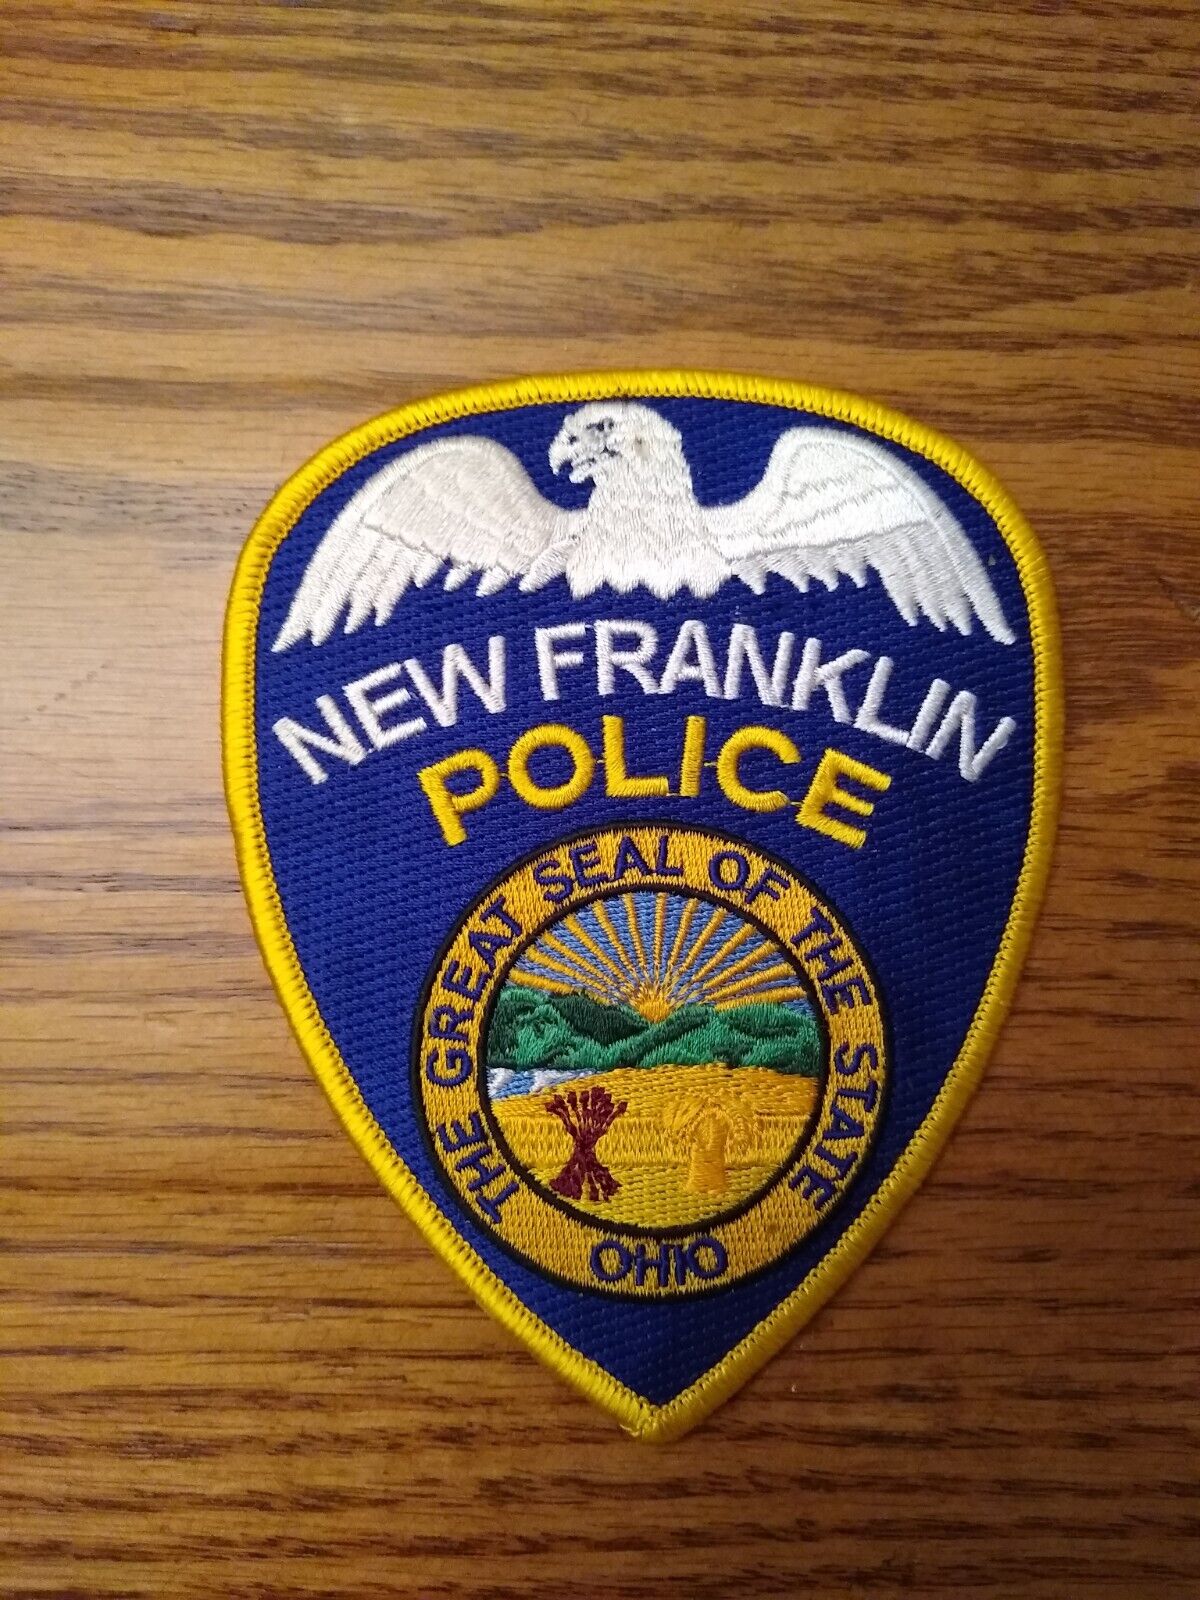 New Franklin, Ohio Police Patch